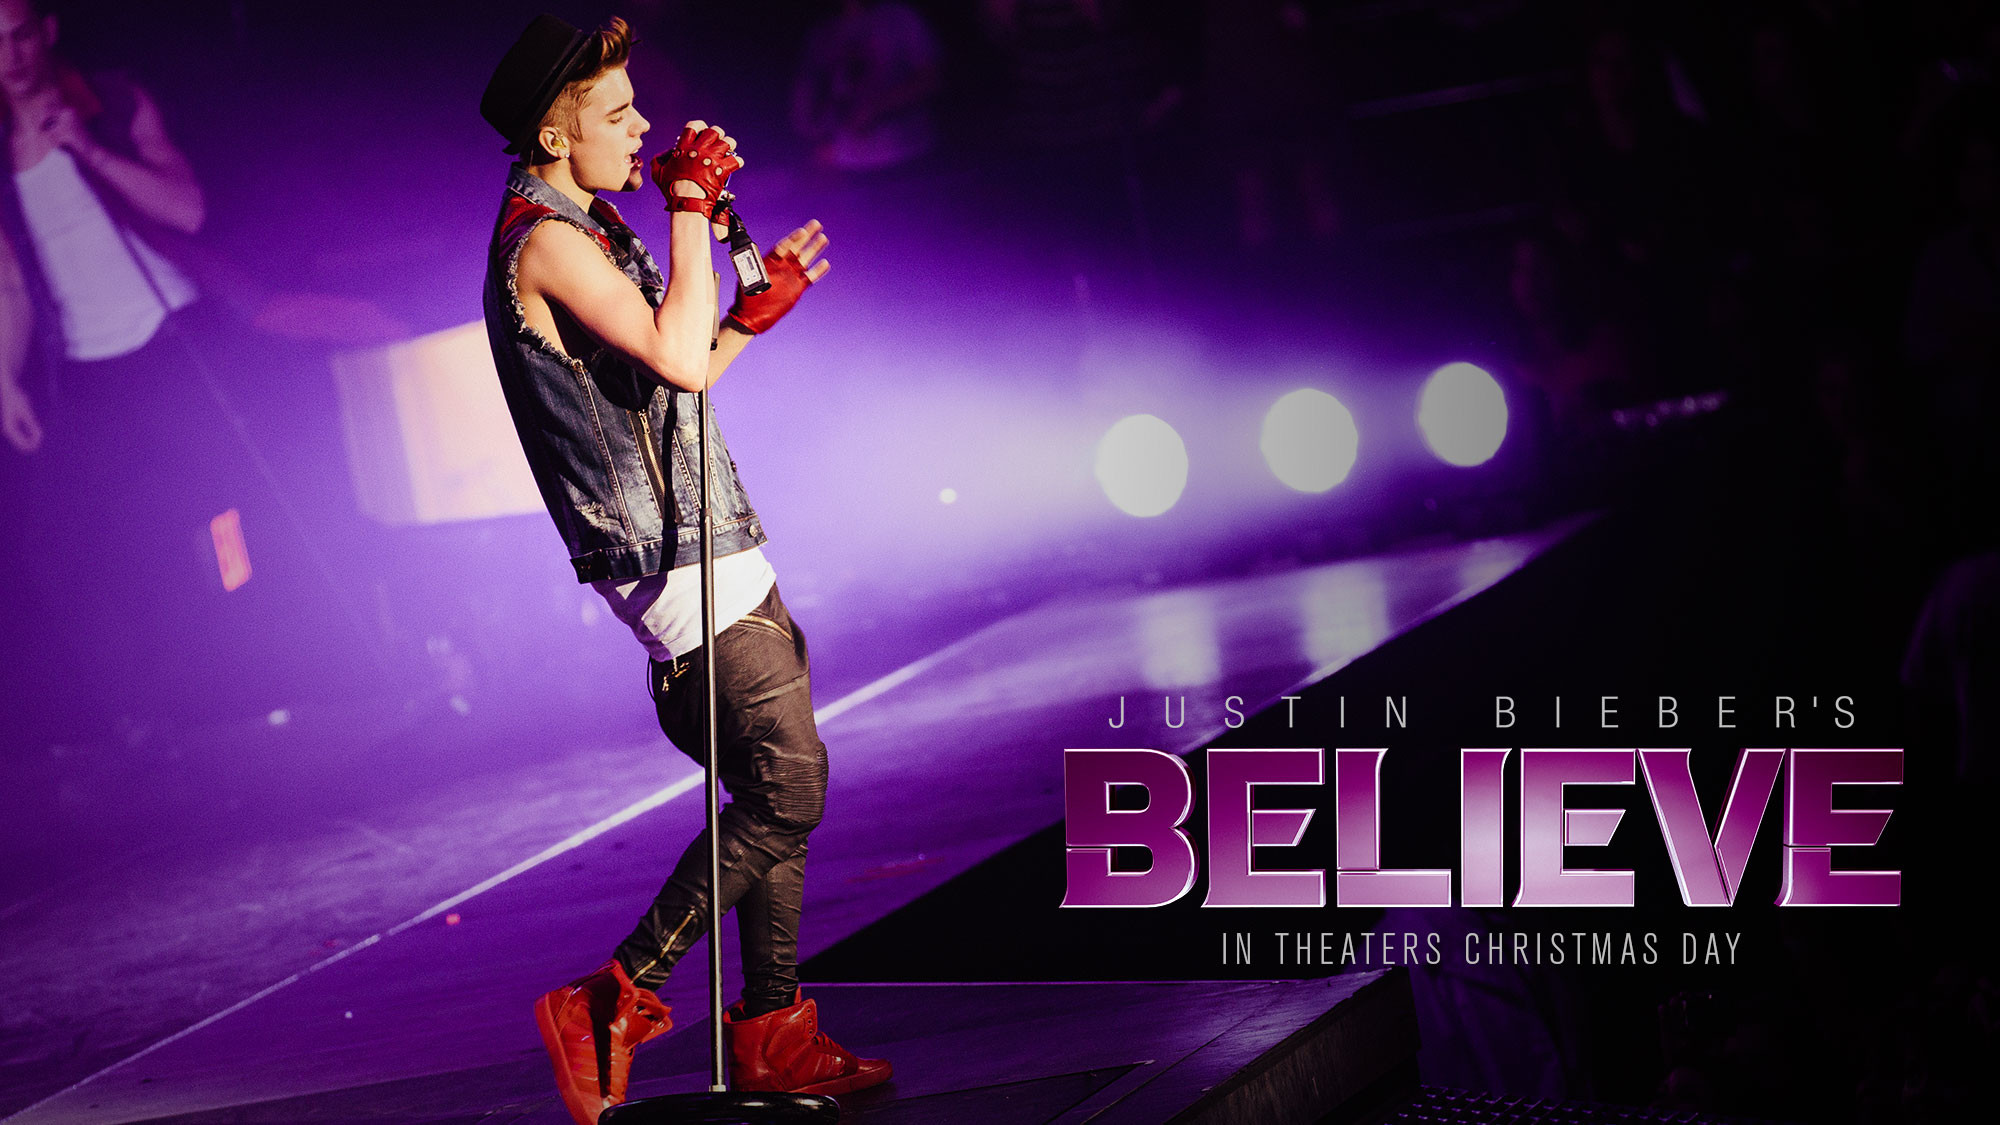 Justin Biebers Believe wallpaper 2jpg